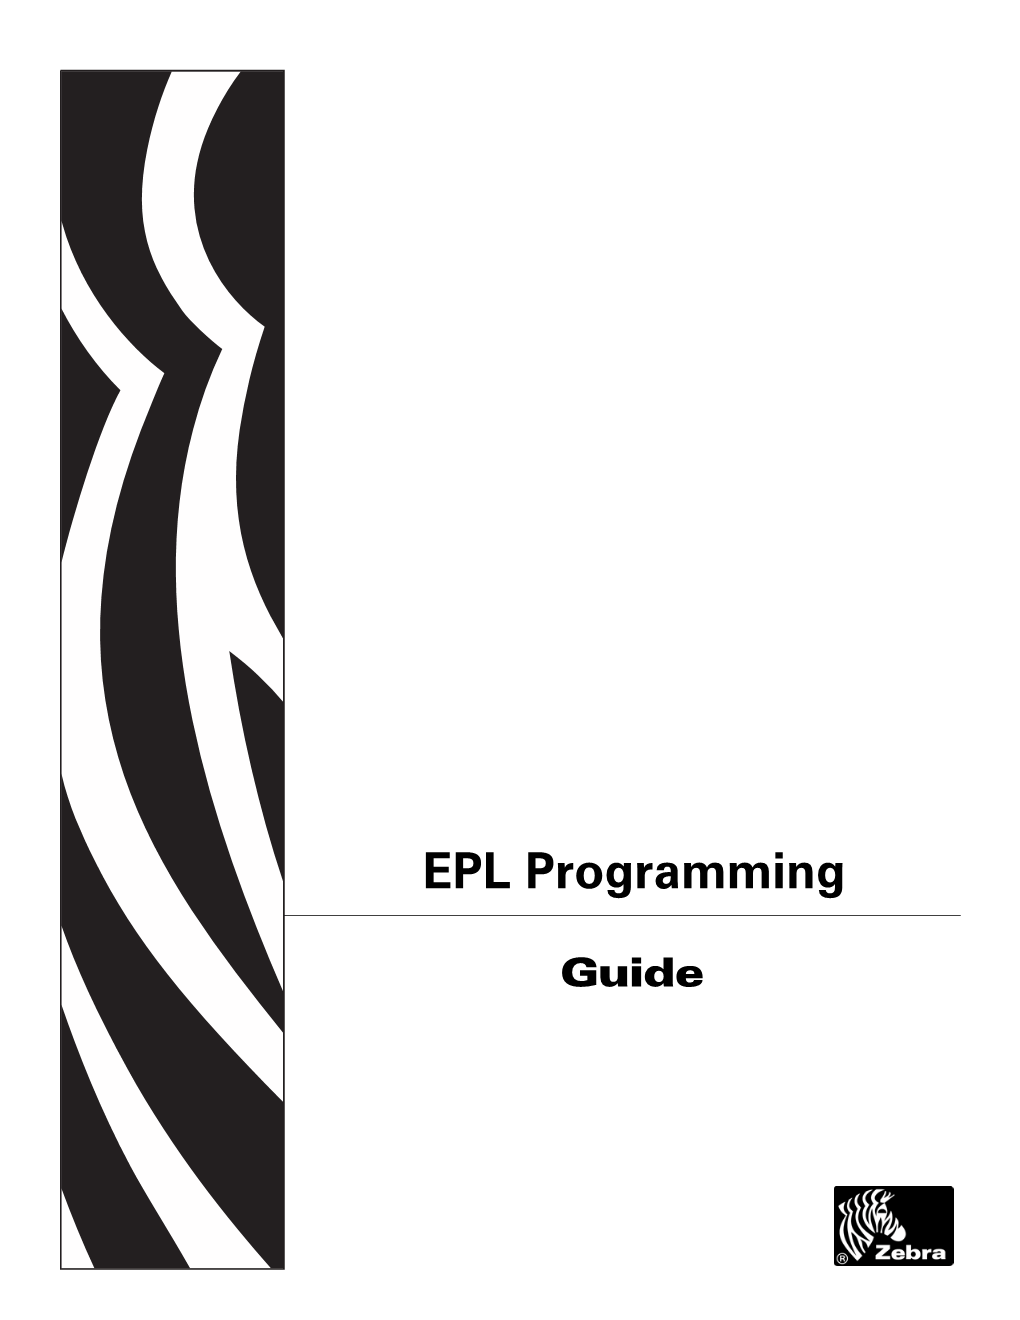 Zebra EPL Programming Guide